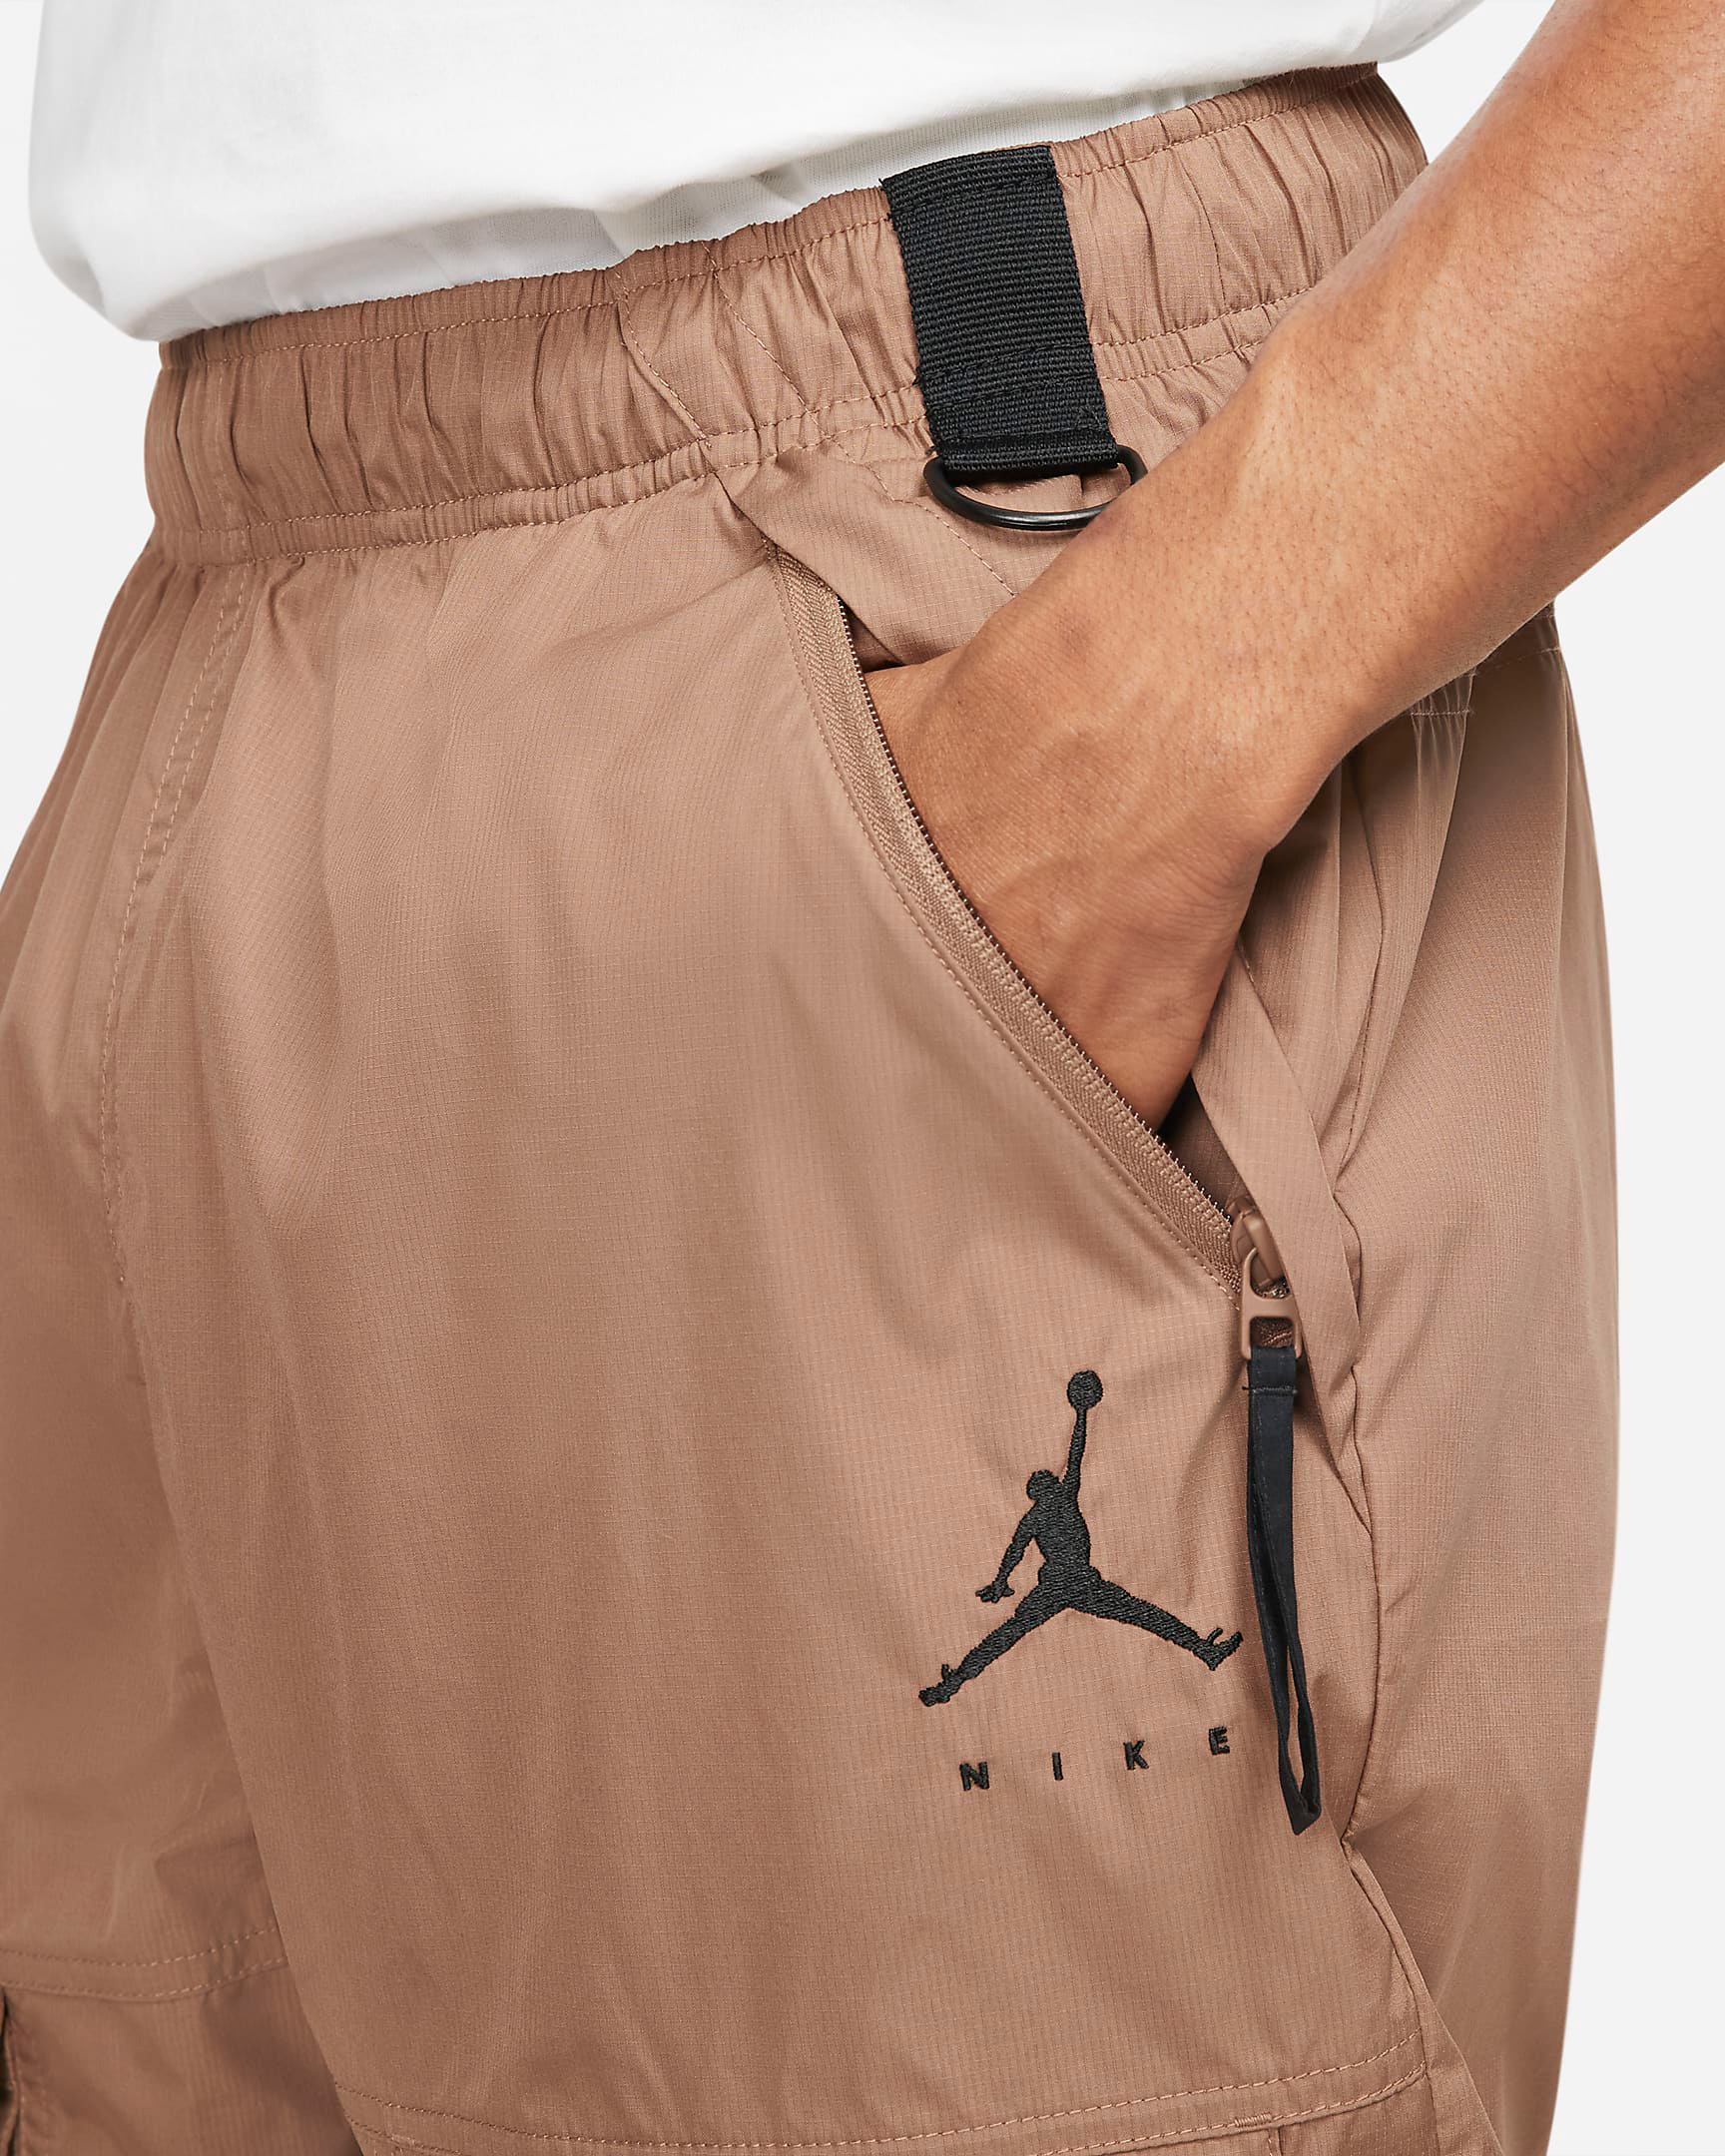 jordan-archaeo-brown-jumpman-cargo-pants-5